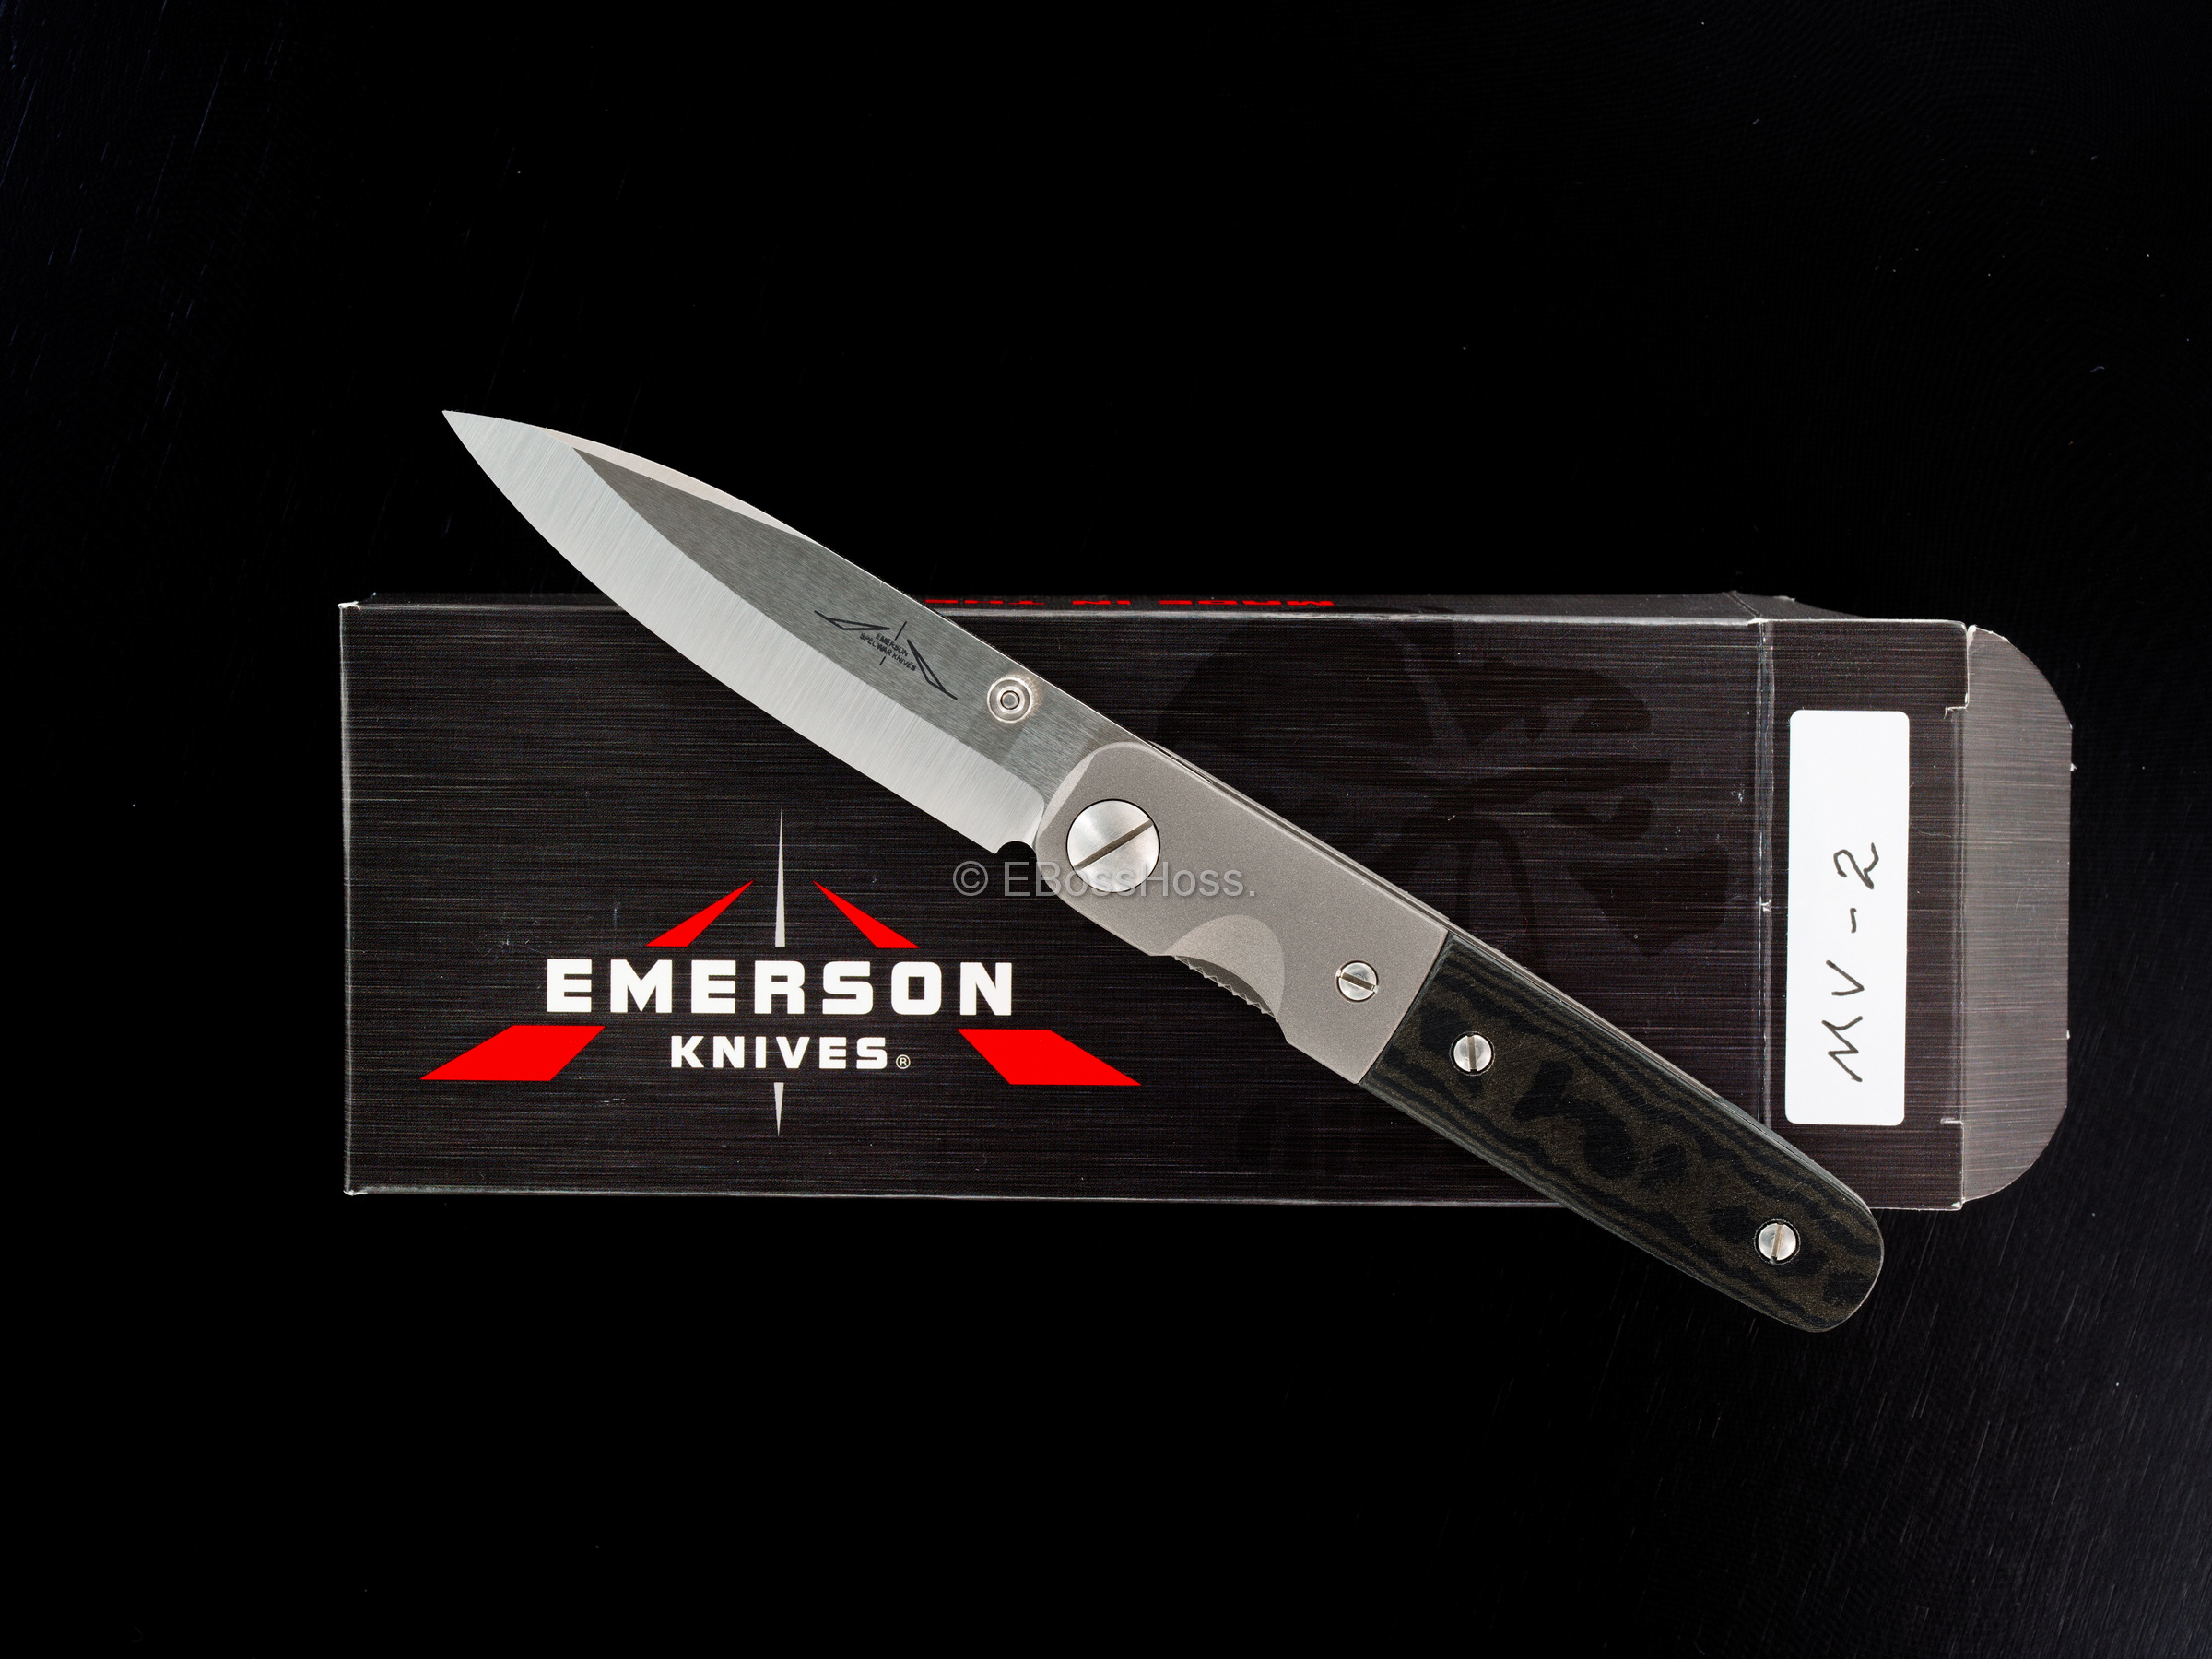 Ernie Emerson Custom MV-2 (aka Viper 2)